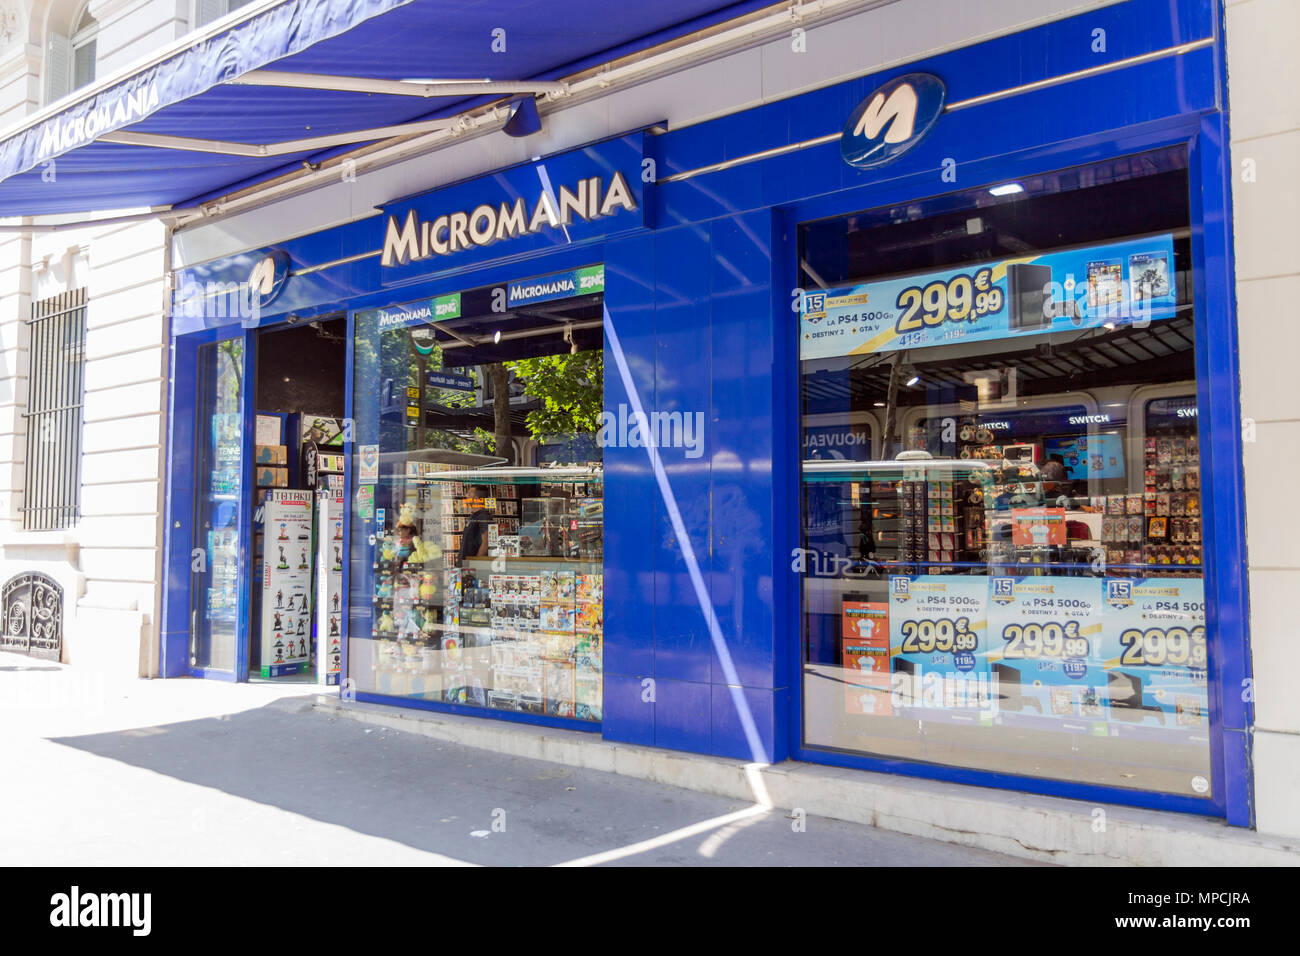 Micromania, video spiel Kette Retail Store Front in Paris, Frankreich Stockfoto